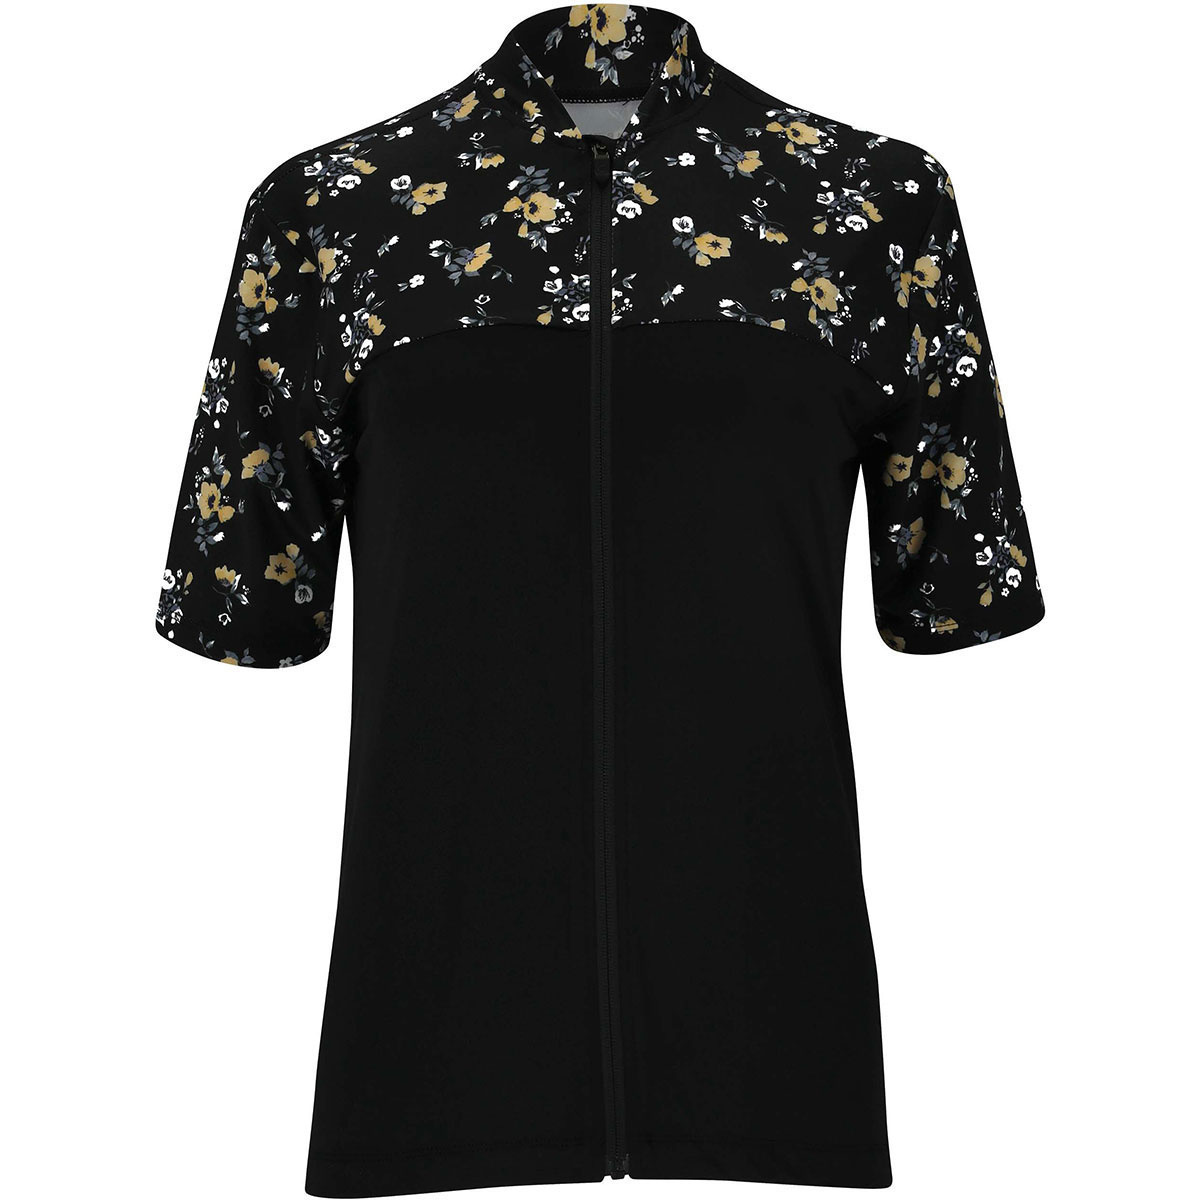 Endurance Damen Mangrove Cycling T-Shirt